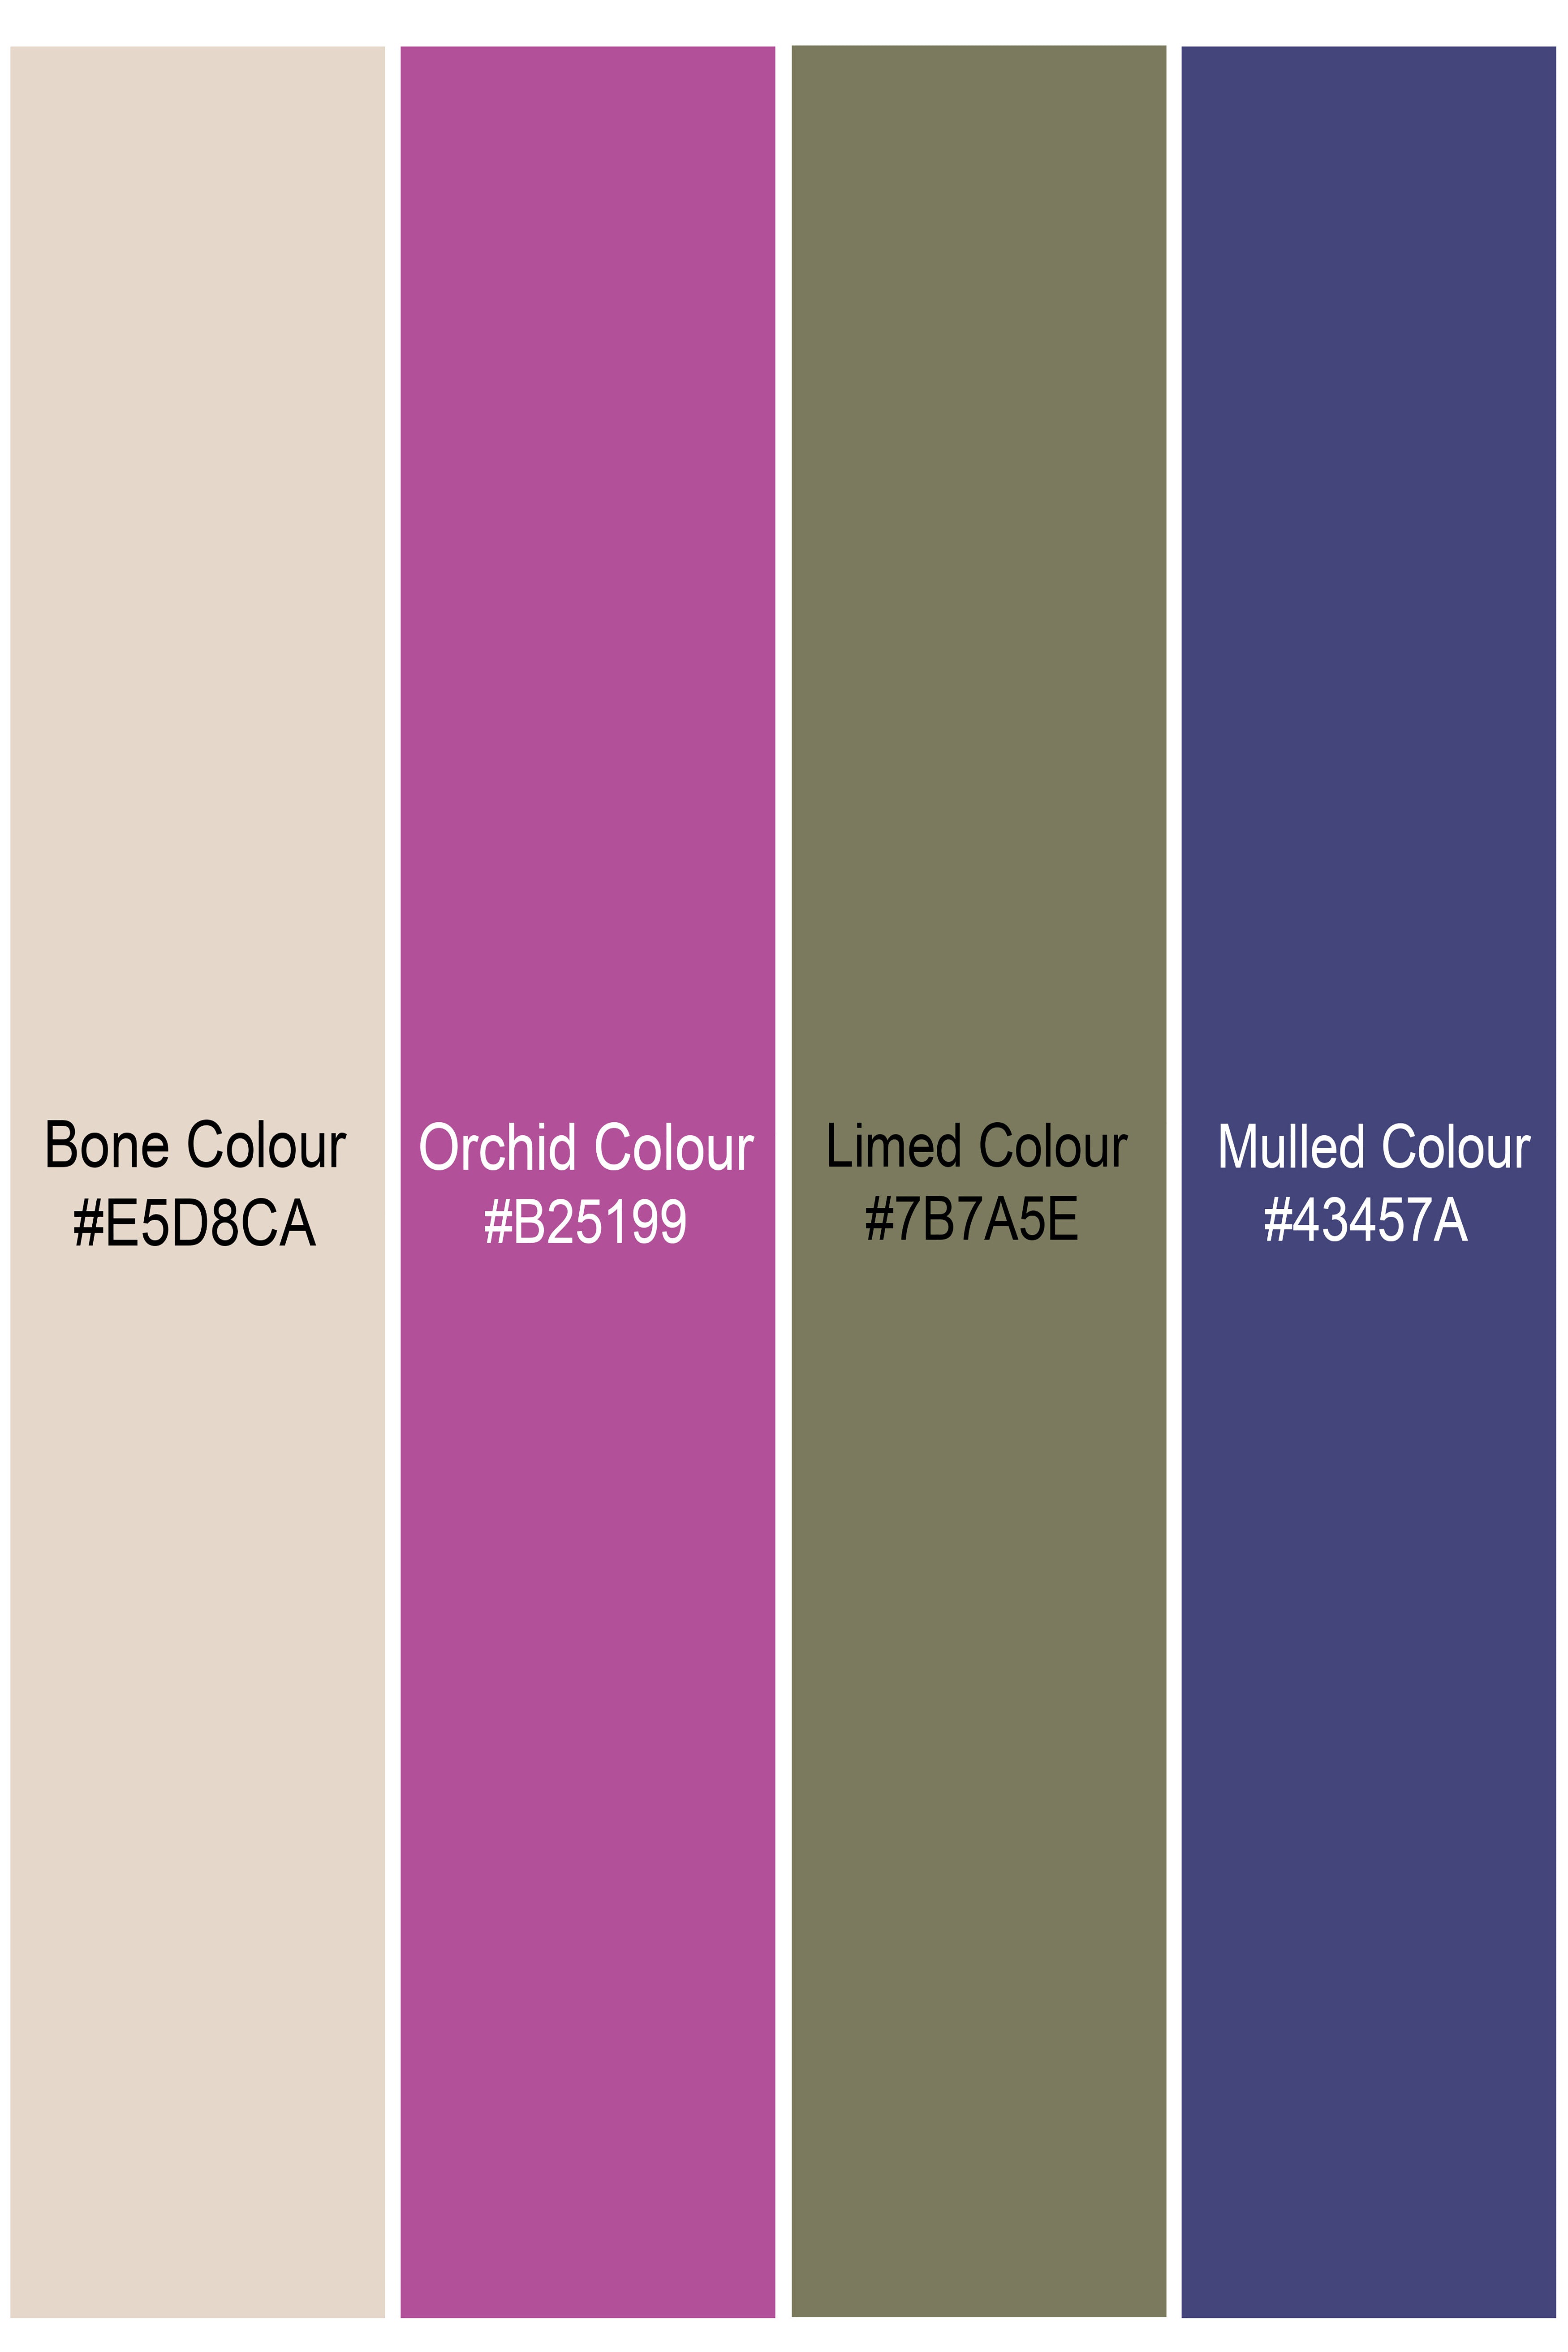 Bone Beige Multicolour Ditsy Printed Lightweight Premium Cotton Oversized Shirt